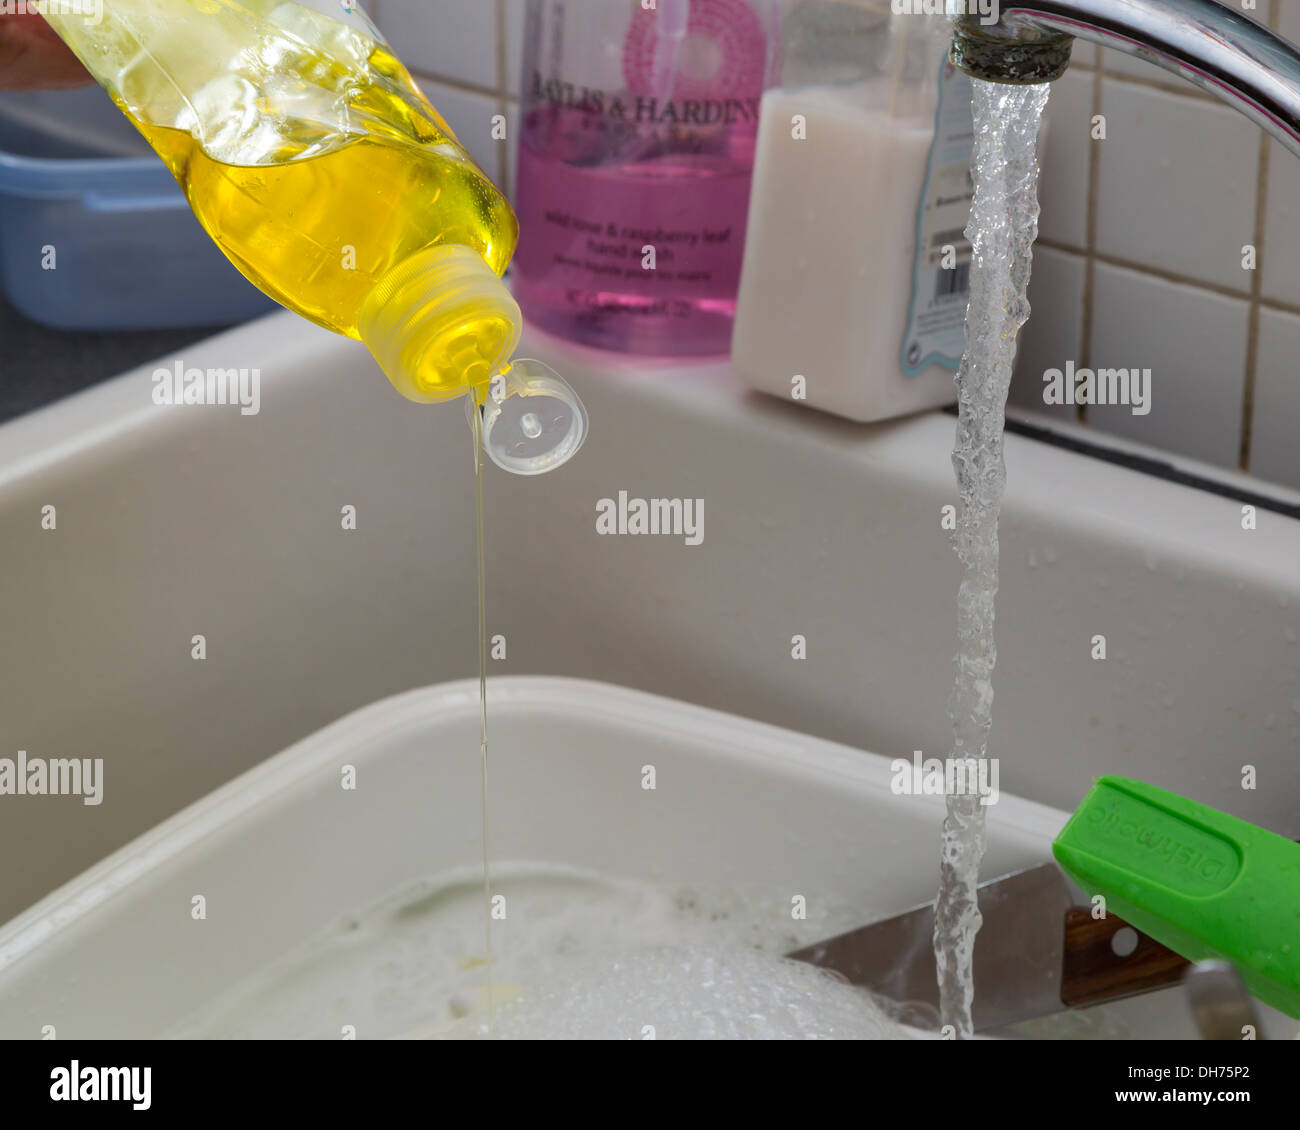 Washing up after preparing food. Stock Photo